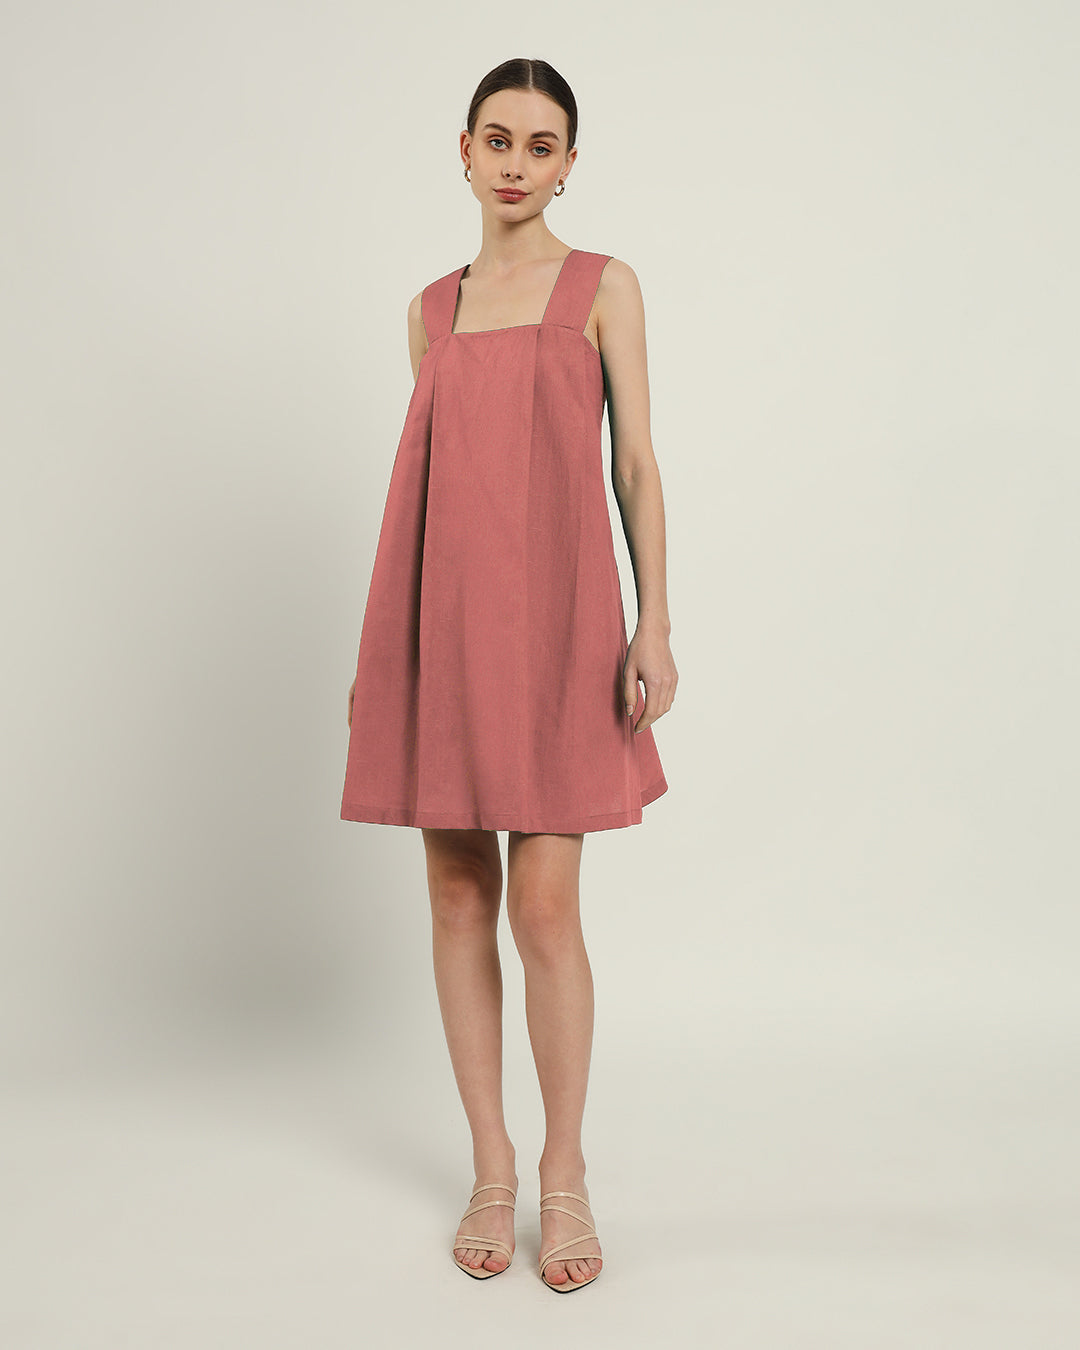 The Larissa Ivory Pink Cotton Dress